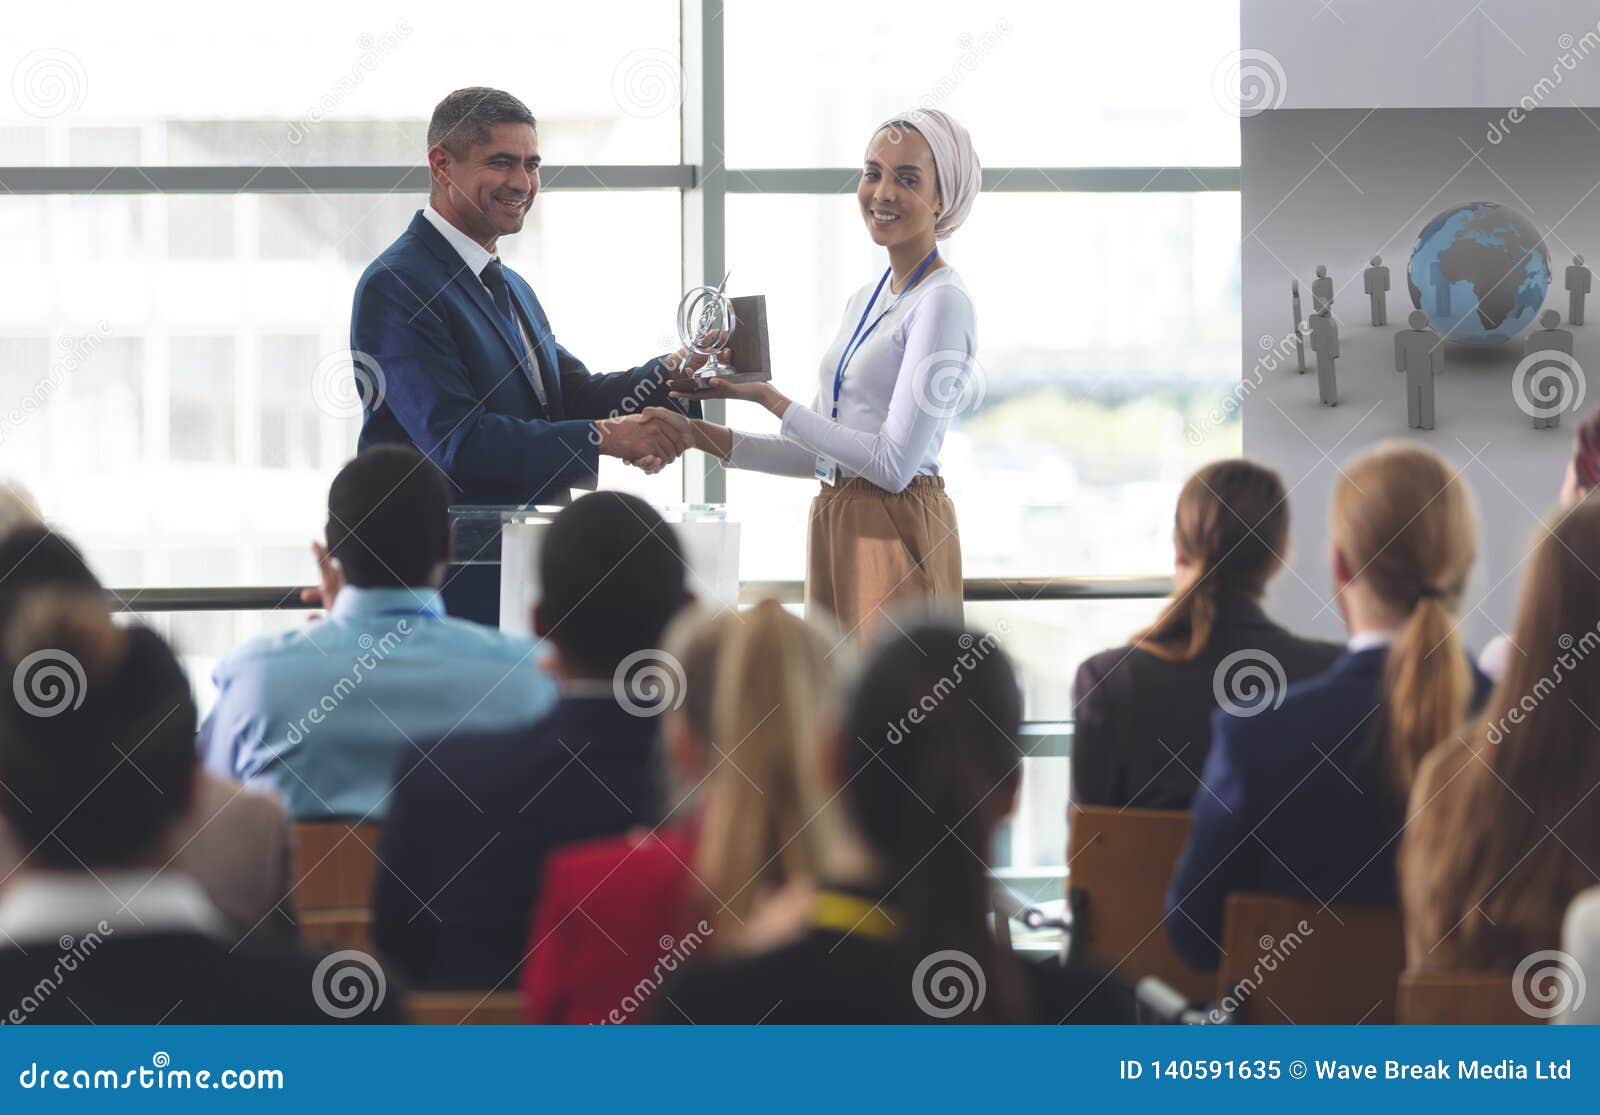 businesswoman receiving award from businessman in a business seminar